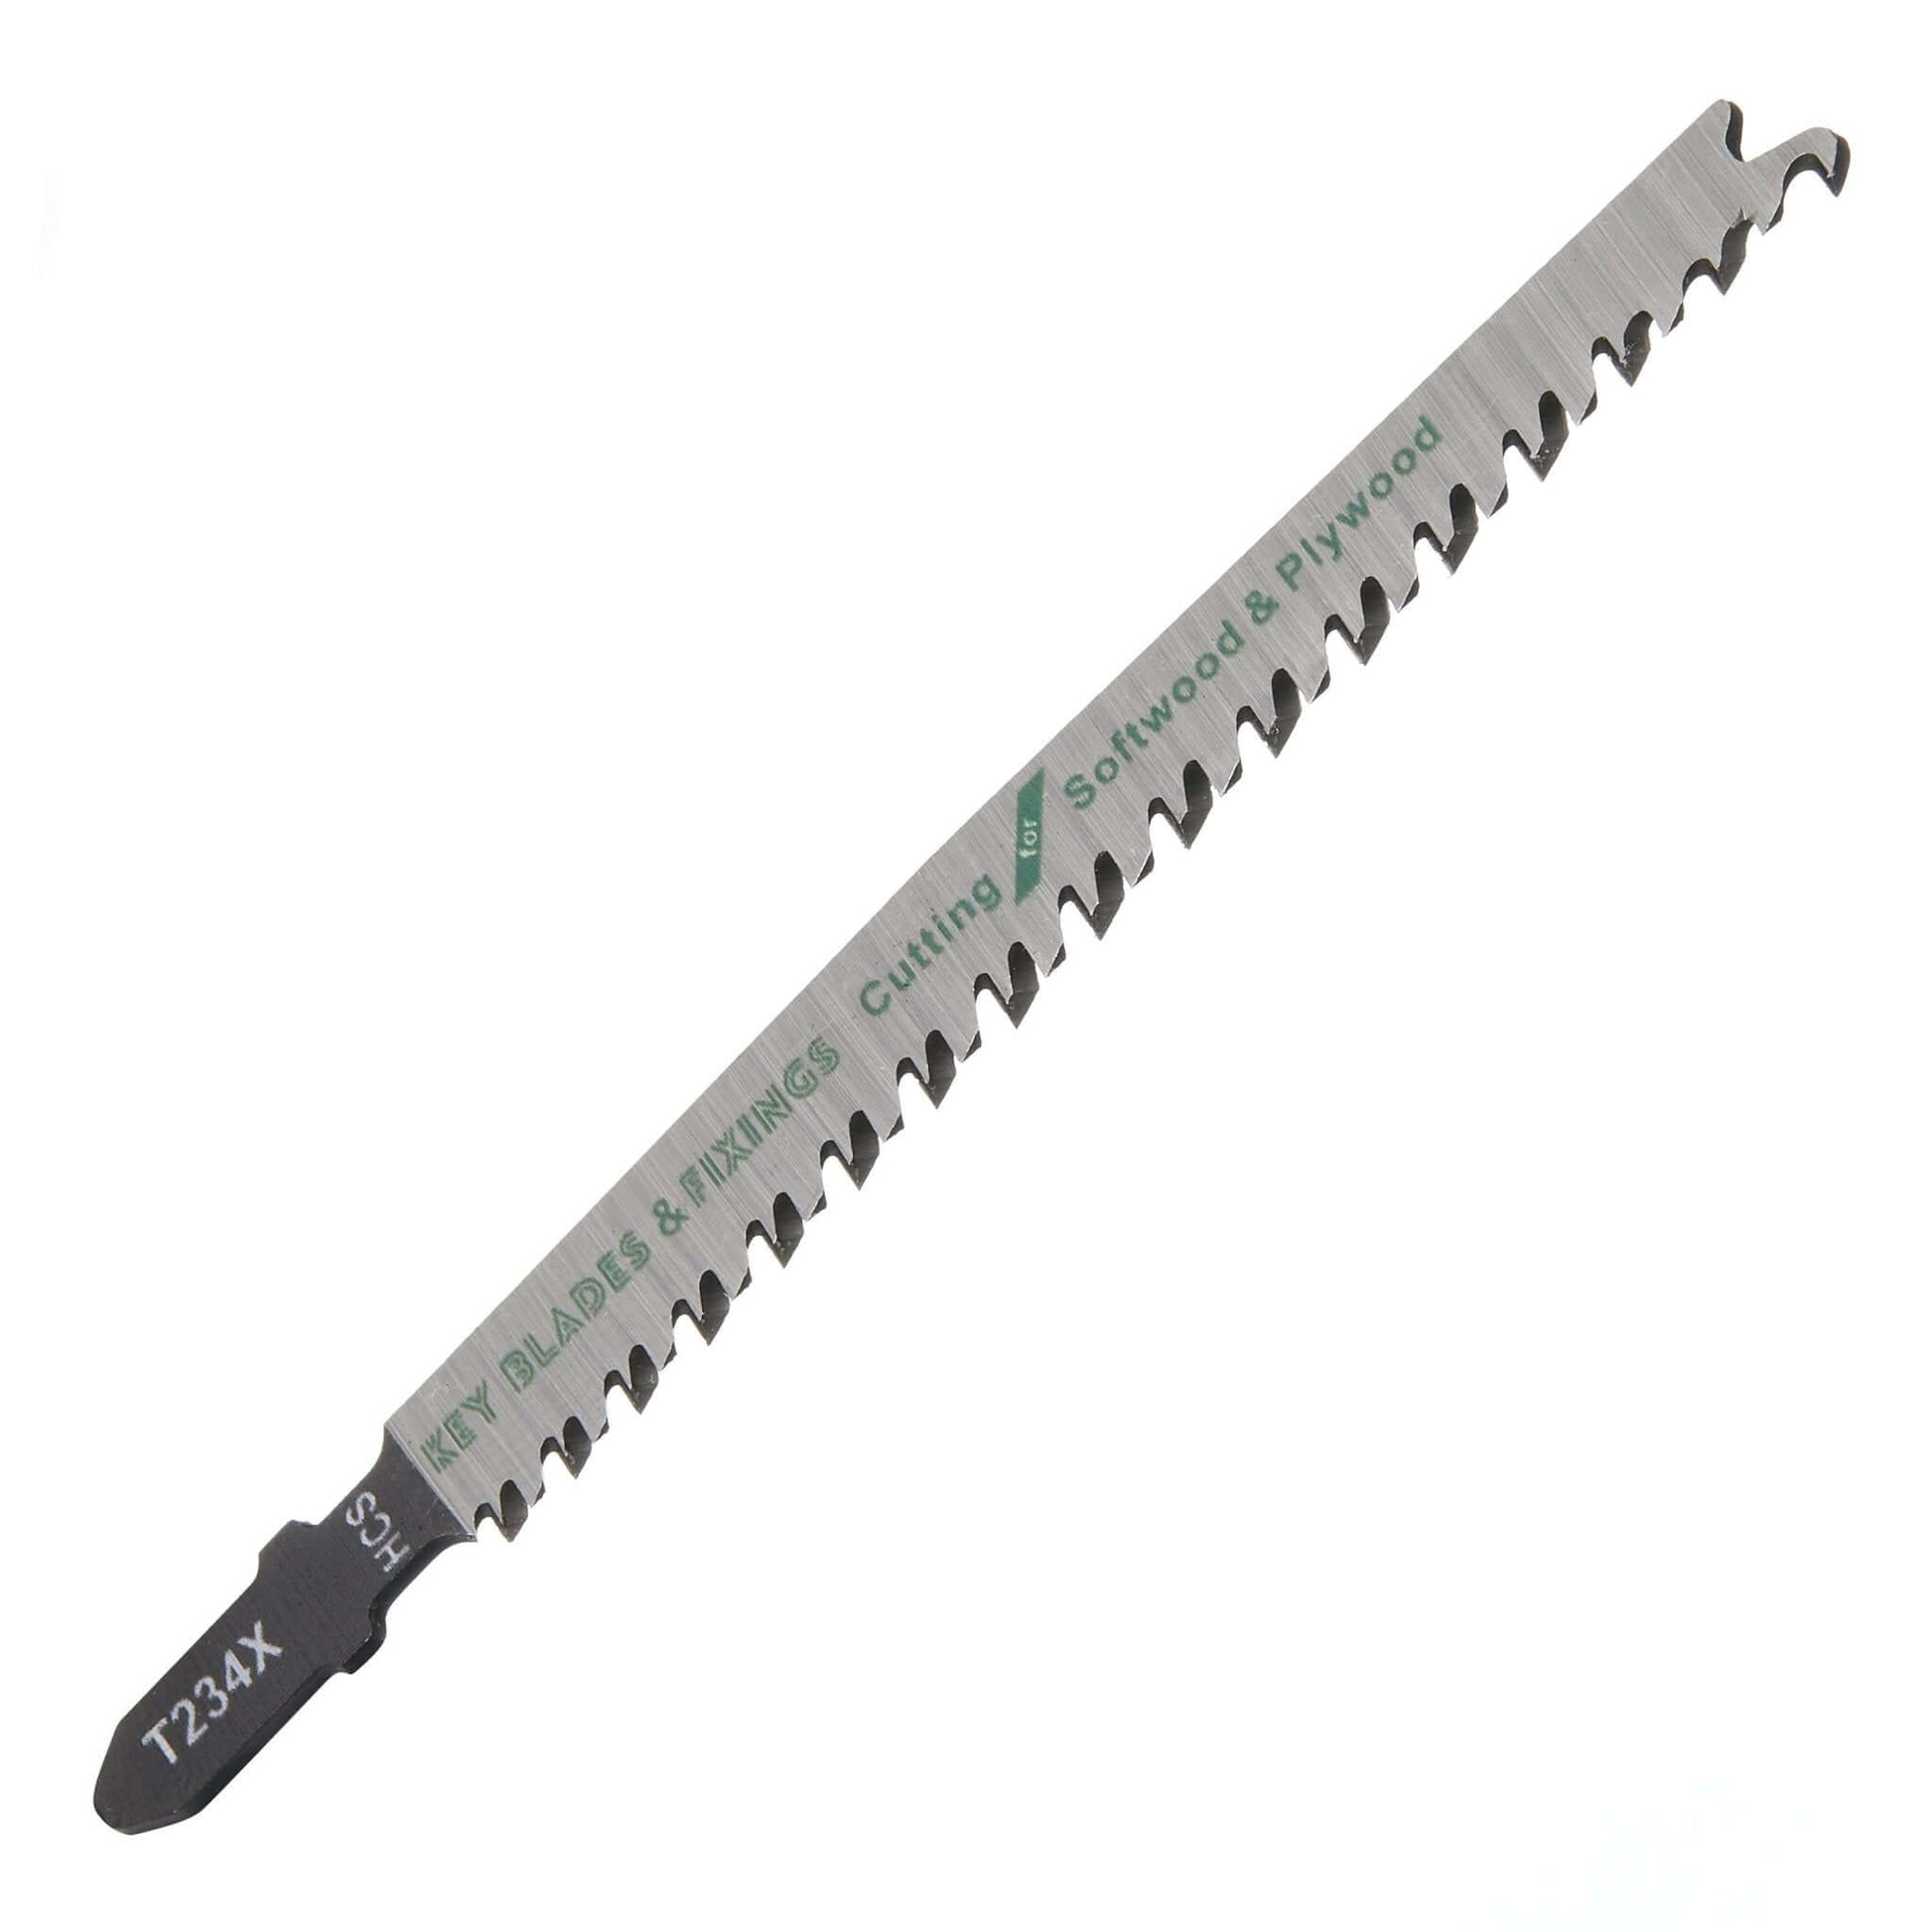 Key Blades T234X Jigsaw Blades 5 Pack - 1177 -  Shop Key Blades & Fixings | Workwear, Power tools & hand tools online - Key Blades & Fixings Ltd